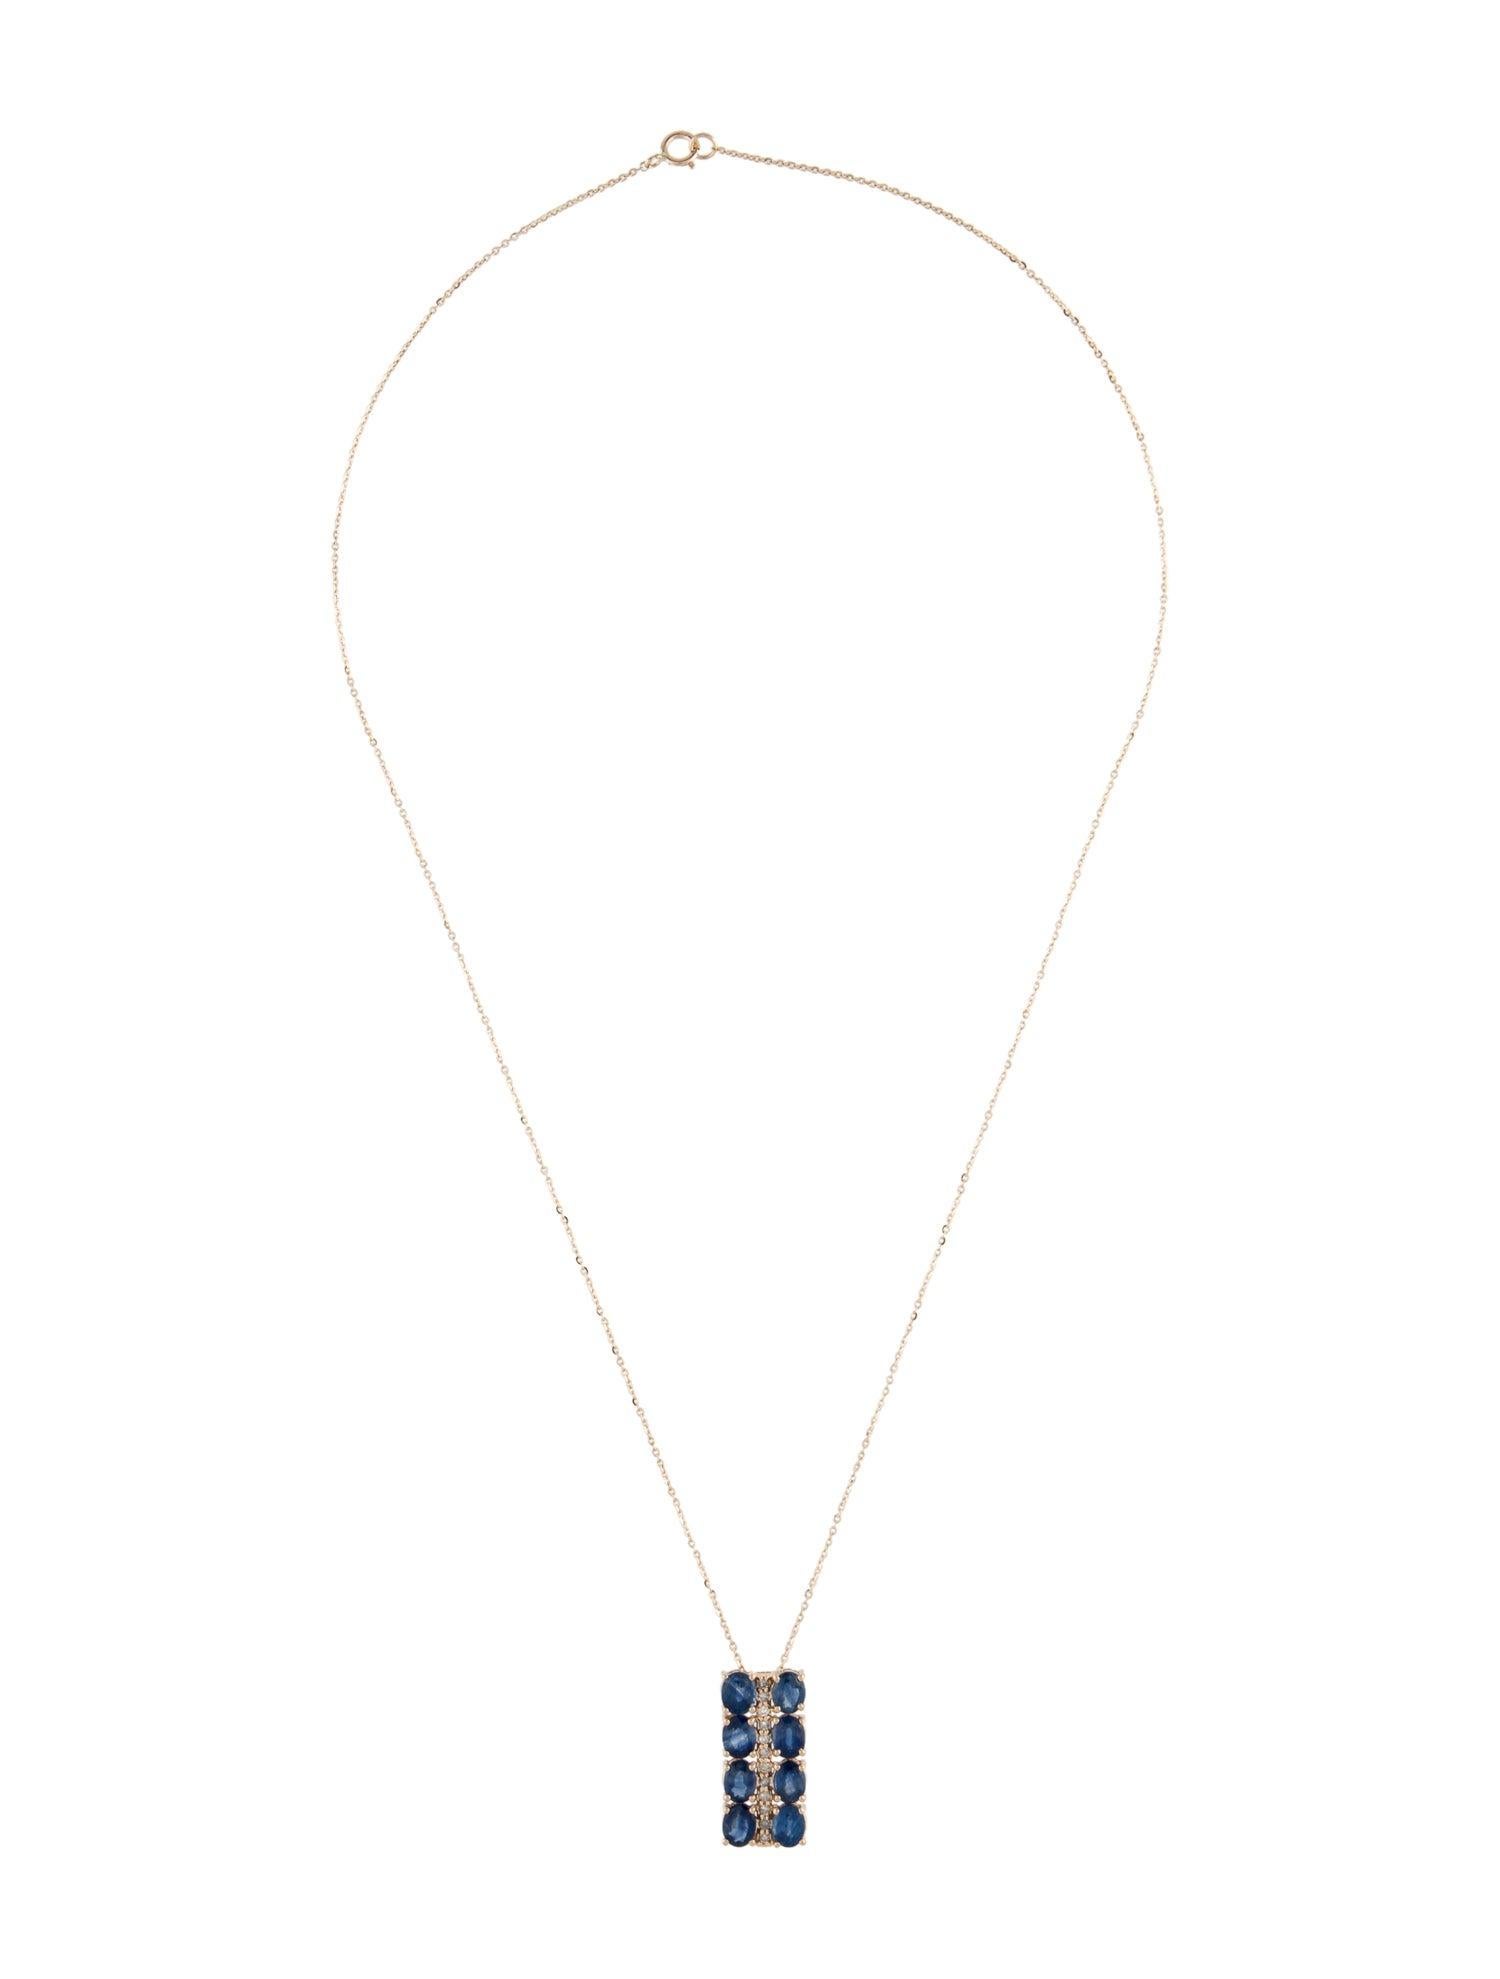 Women's 14K 3.78ctw Sapphire & Diamond Pendant Necklace: Luxury Statement Jewelry Piece For Sale